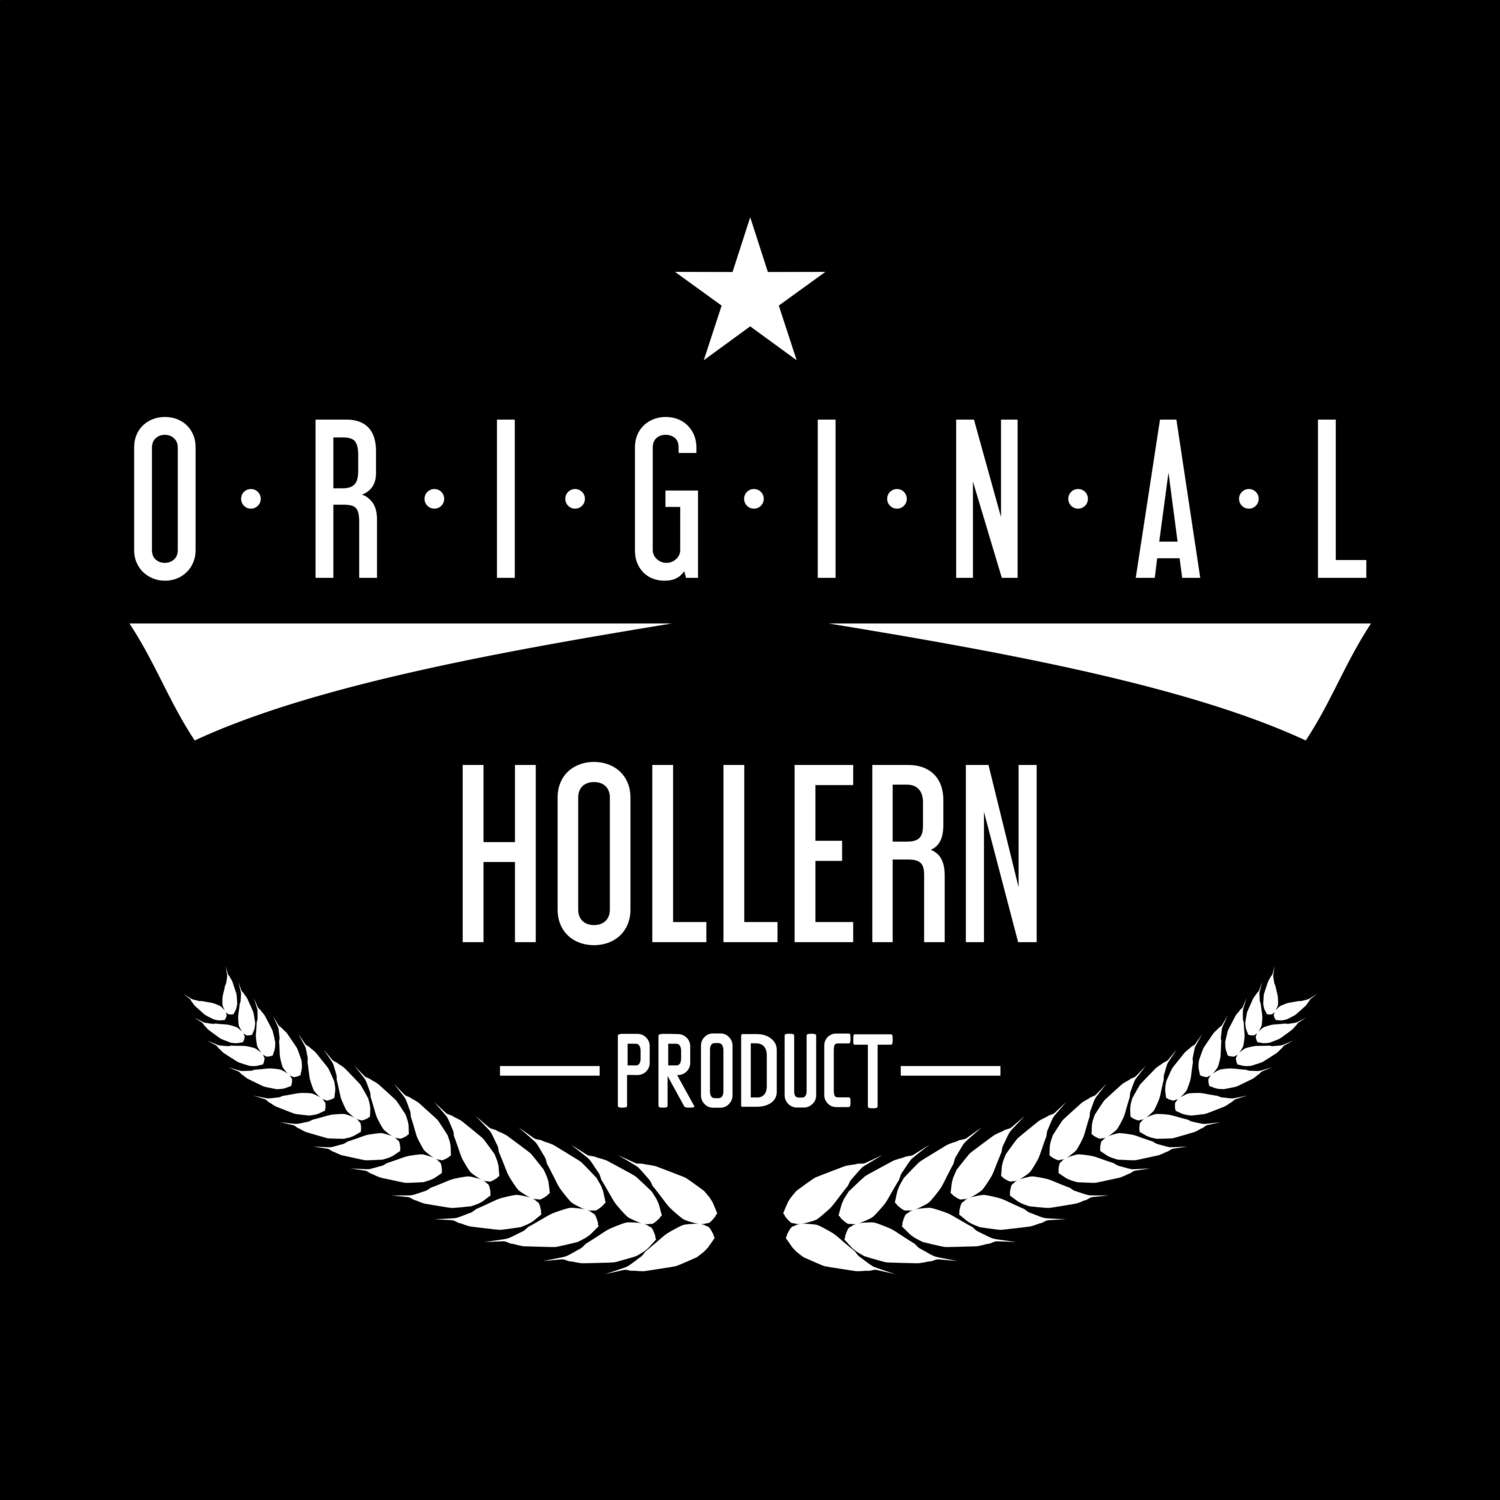 Hollern T-Shirt »Original Product«